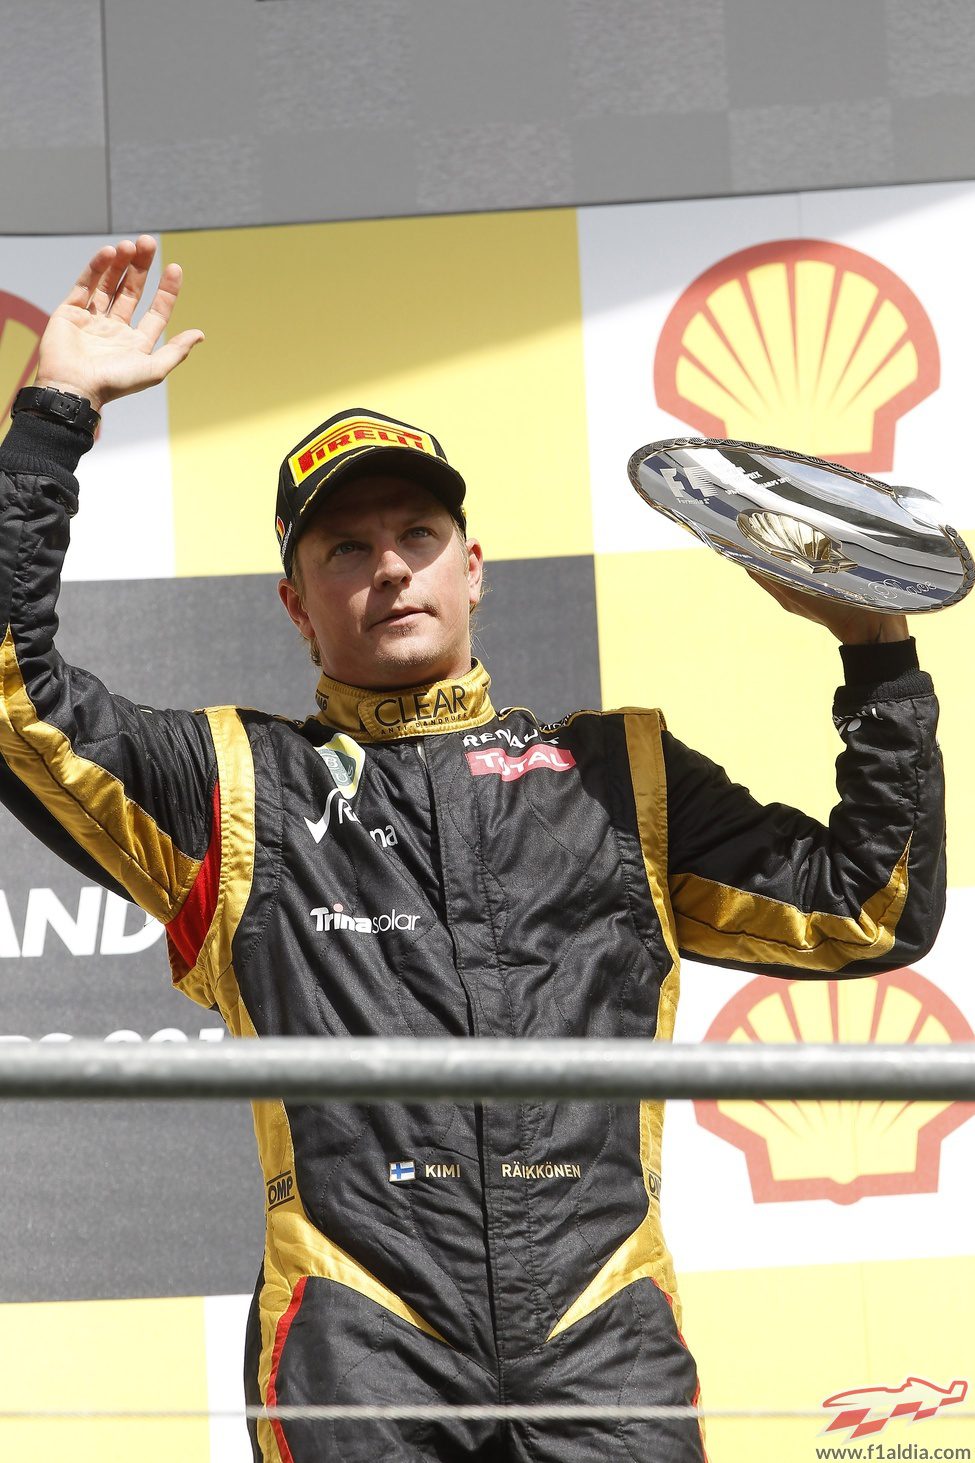 Kimi Räikkönen, en el podio